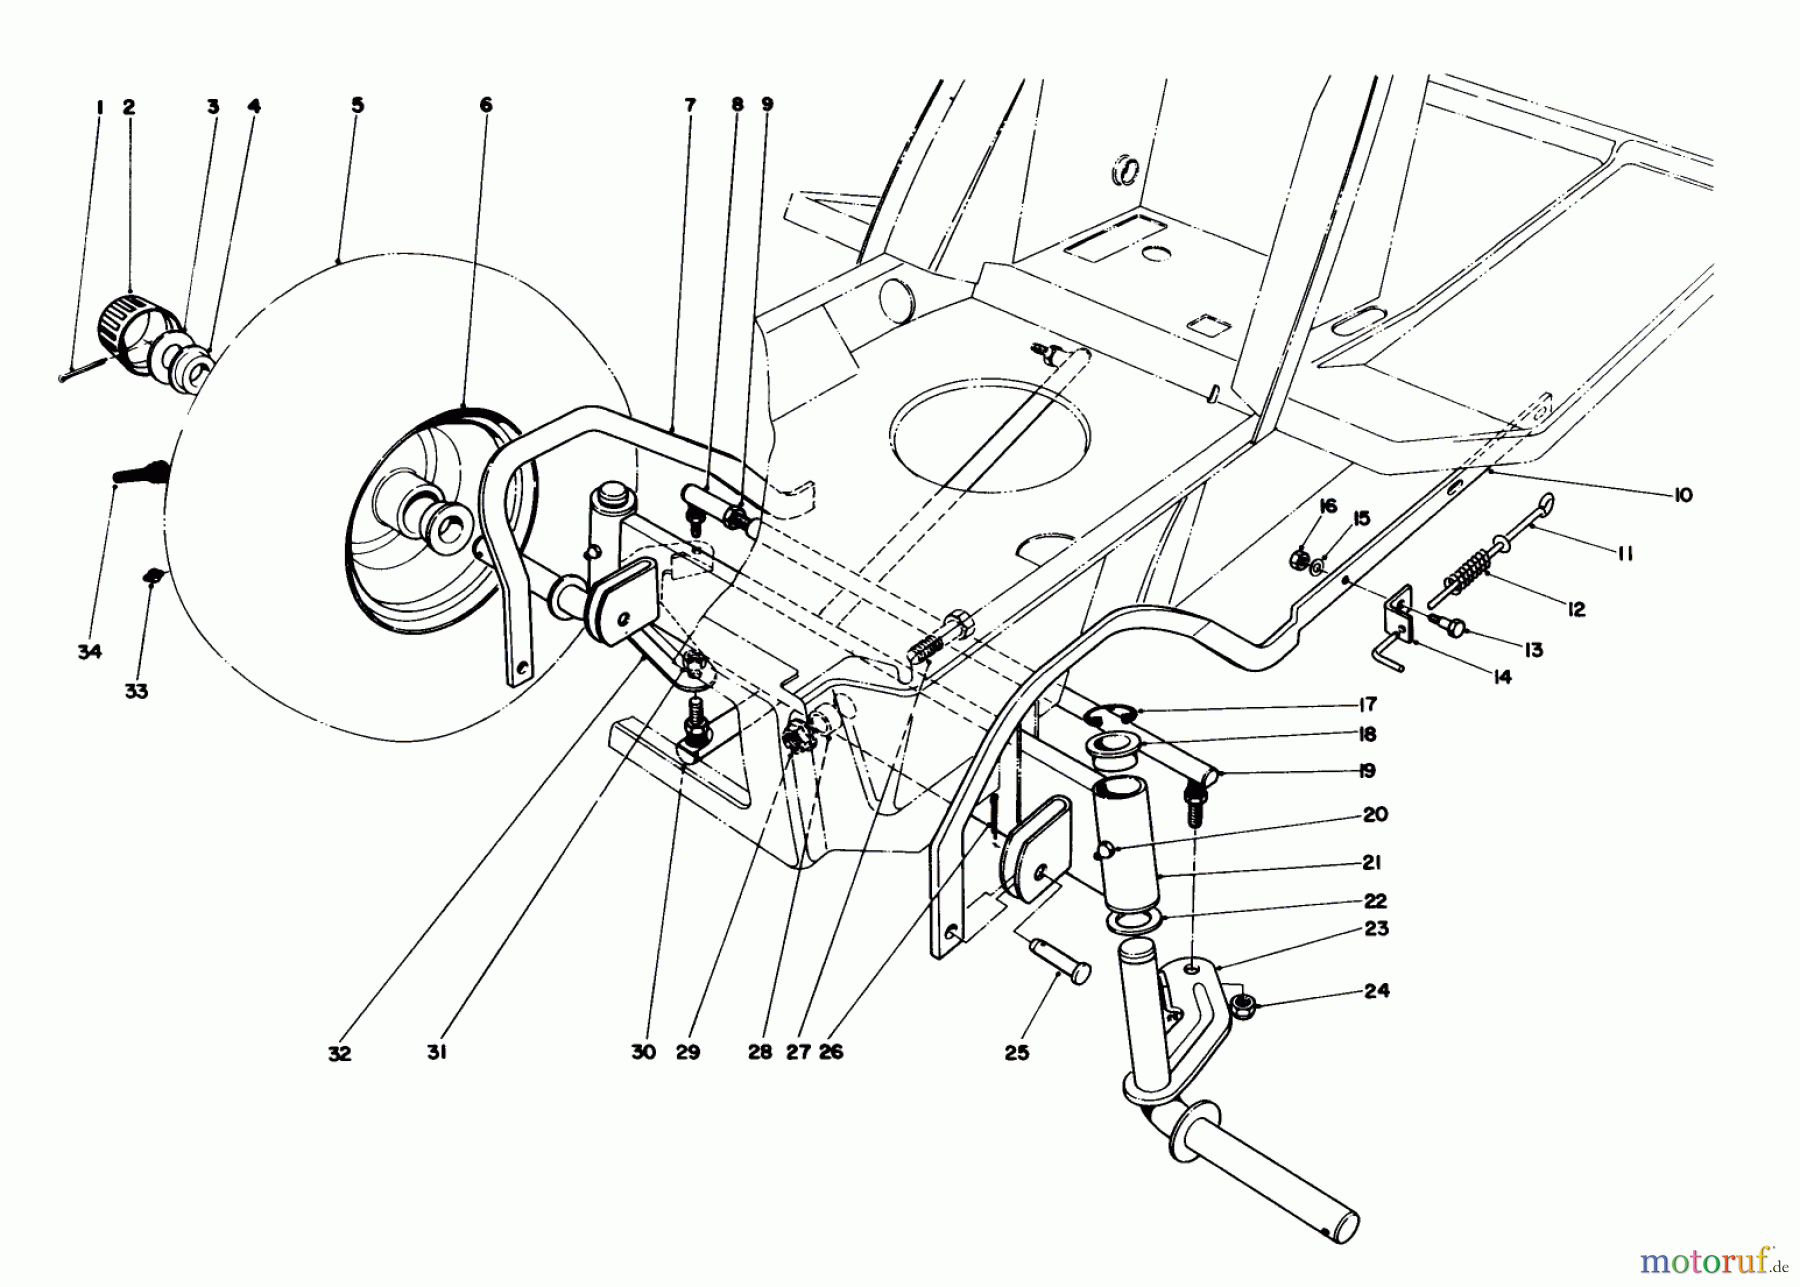  Toro Neu Mowers, Lawn & Garden Tractor Seite 1 57354 (11-44) - Toro 11-44 Pro Lawn Tractor, 1986 (6000001-6999999) FRONT AXLE ASSEMBLY